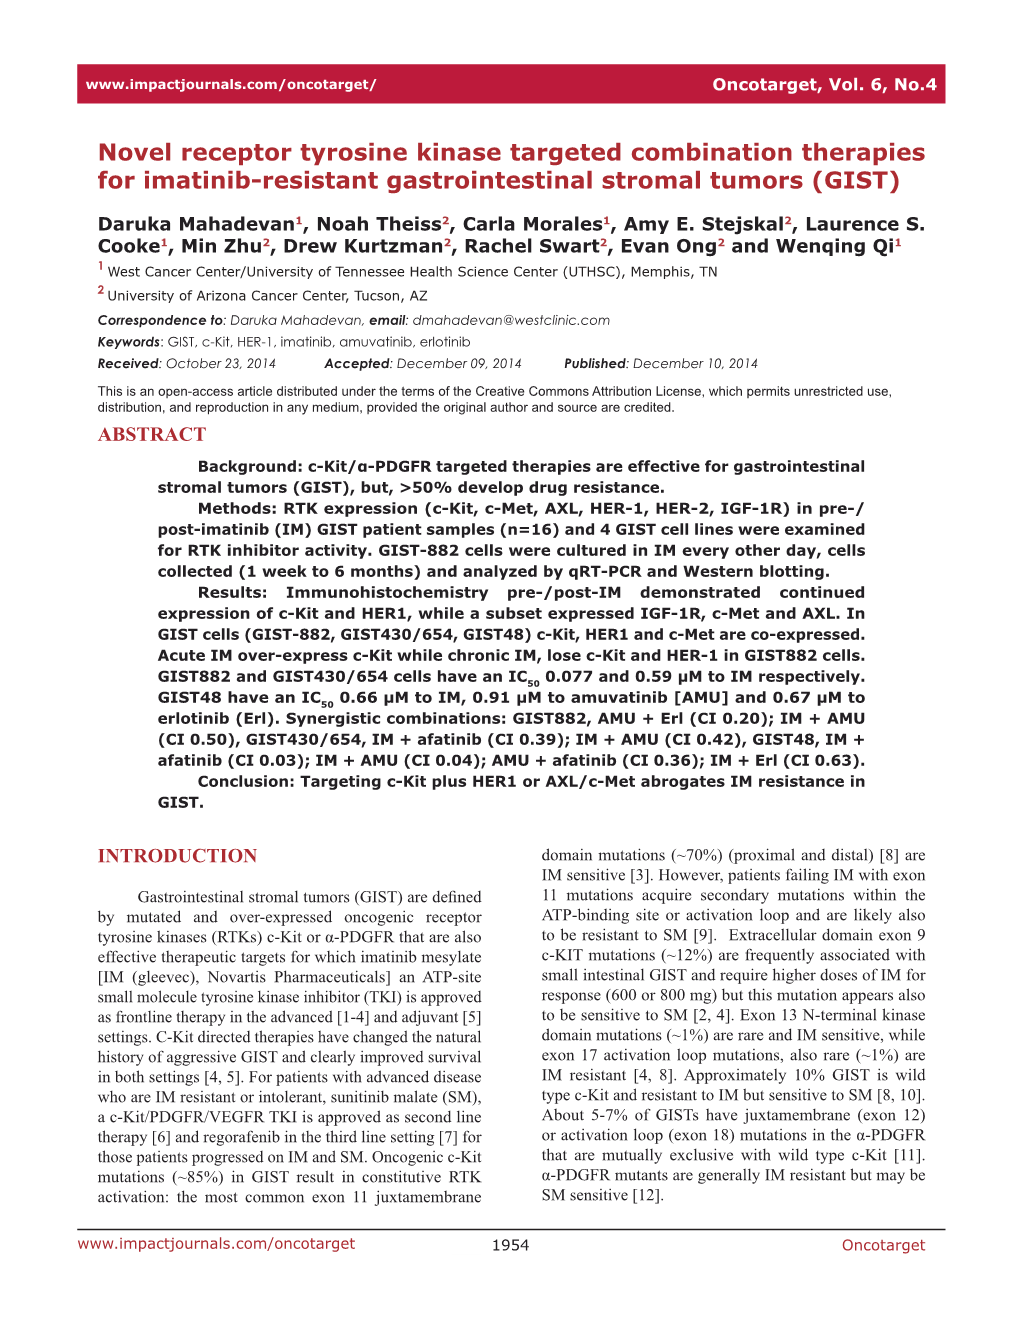 Novel Receptor Tyrosine Kinase Targeted Combination Therapies for Imatinib-Resistant Gastrointestinal Stromal Tumors (GIST)